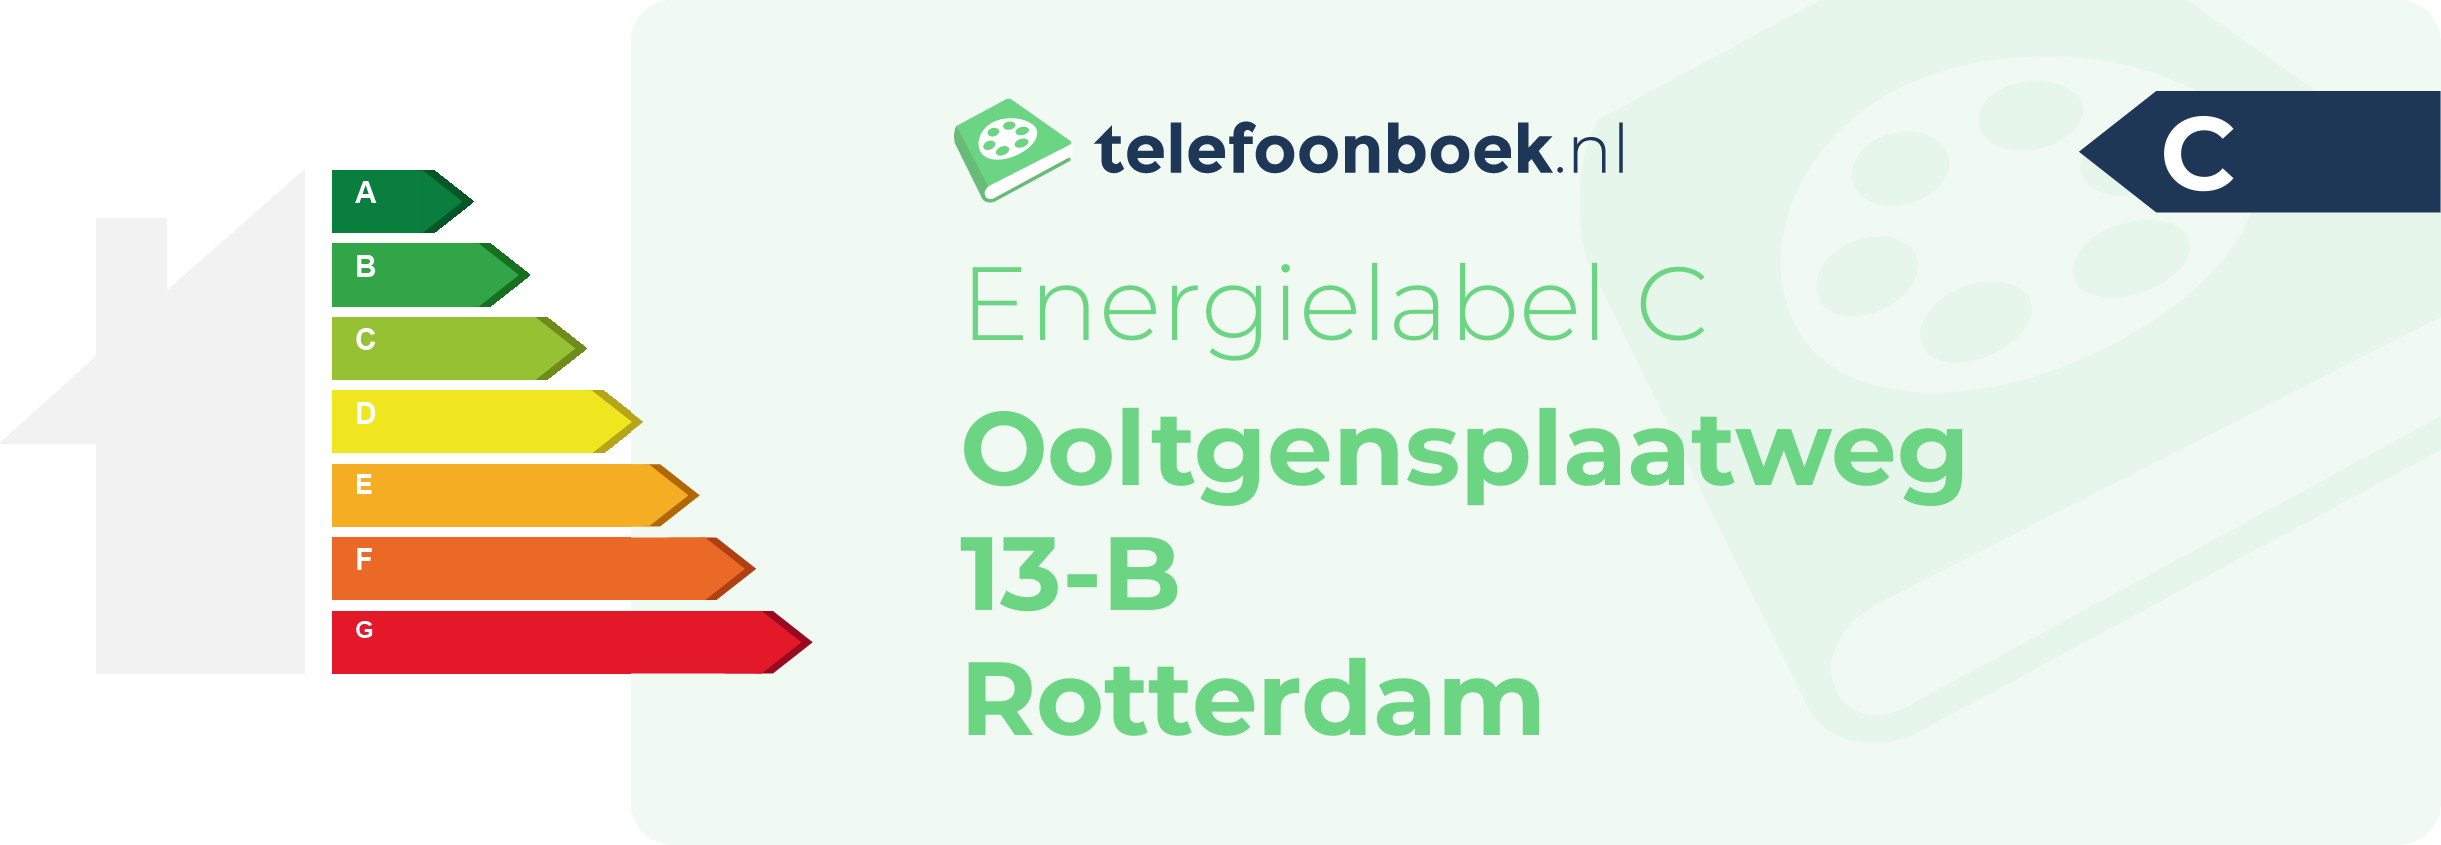 Energielabel Ooltgensplaatweg 13-B Rotterdam